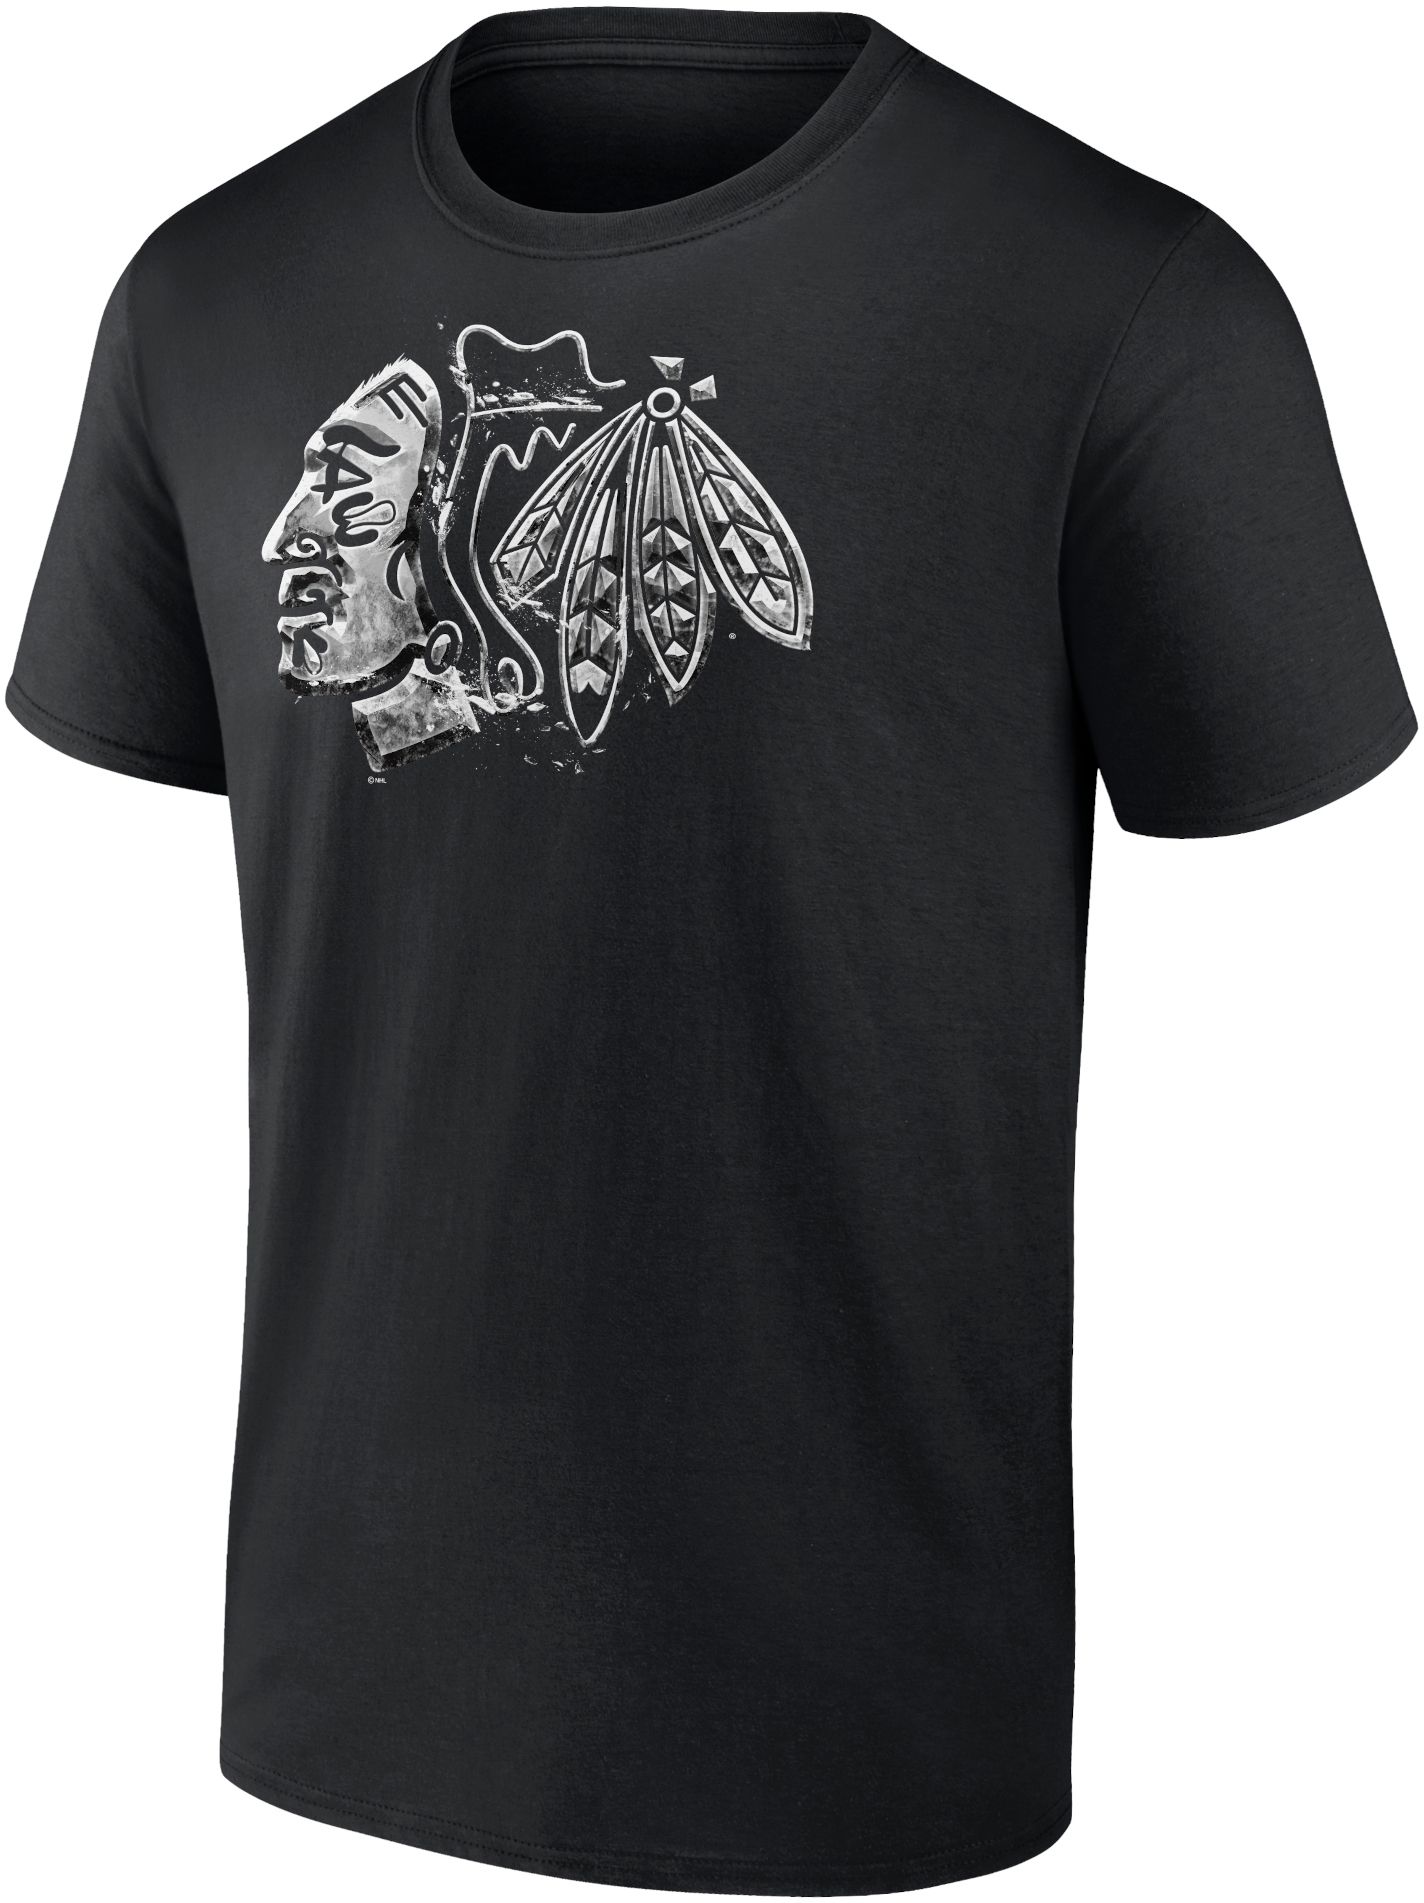 NHL Chicago Blackhawks Iced Out Black T-Shirt